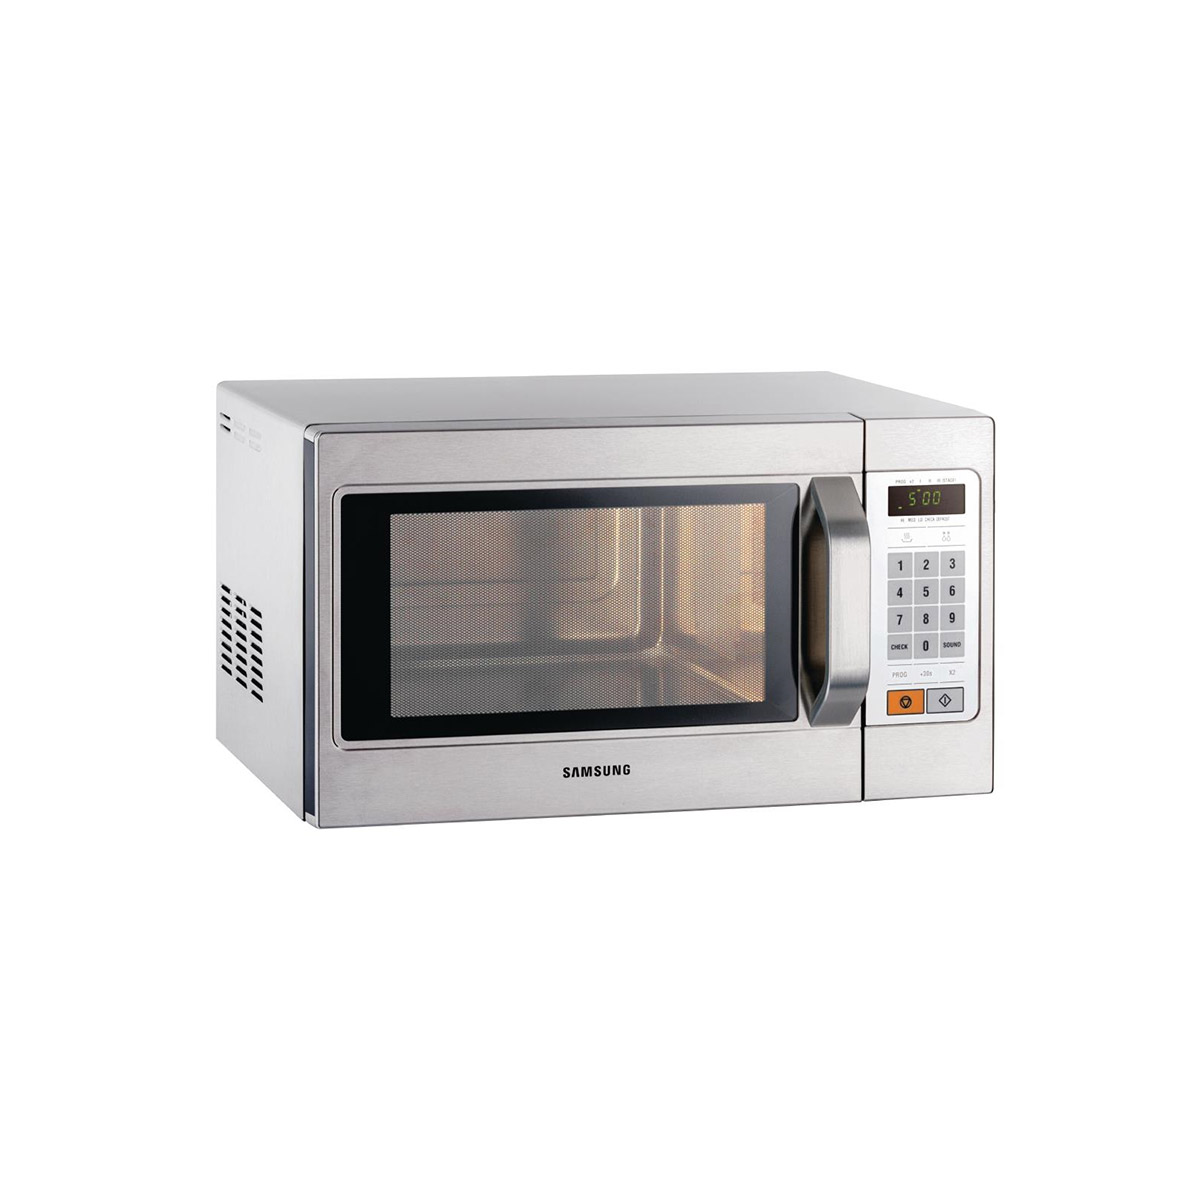 Samsung 1100W Microwave Oven CM1089